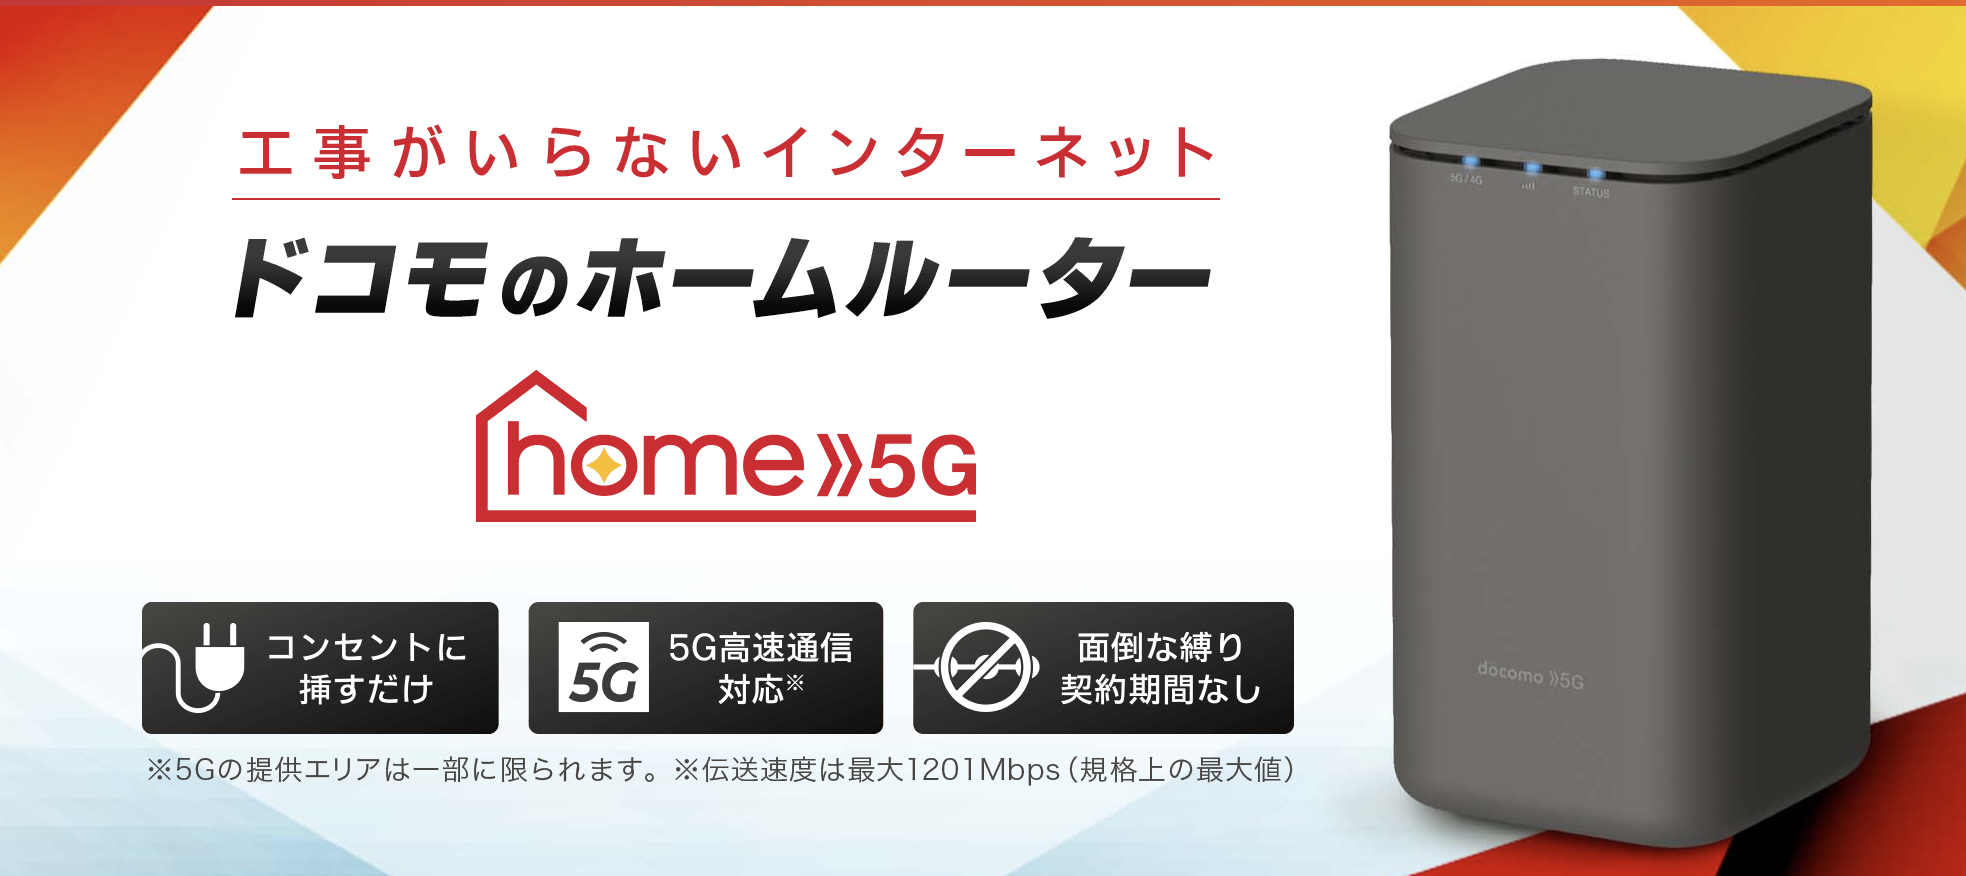 home 5G HR02について解説します